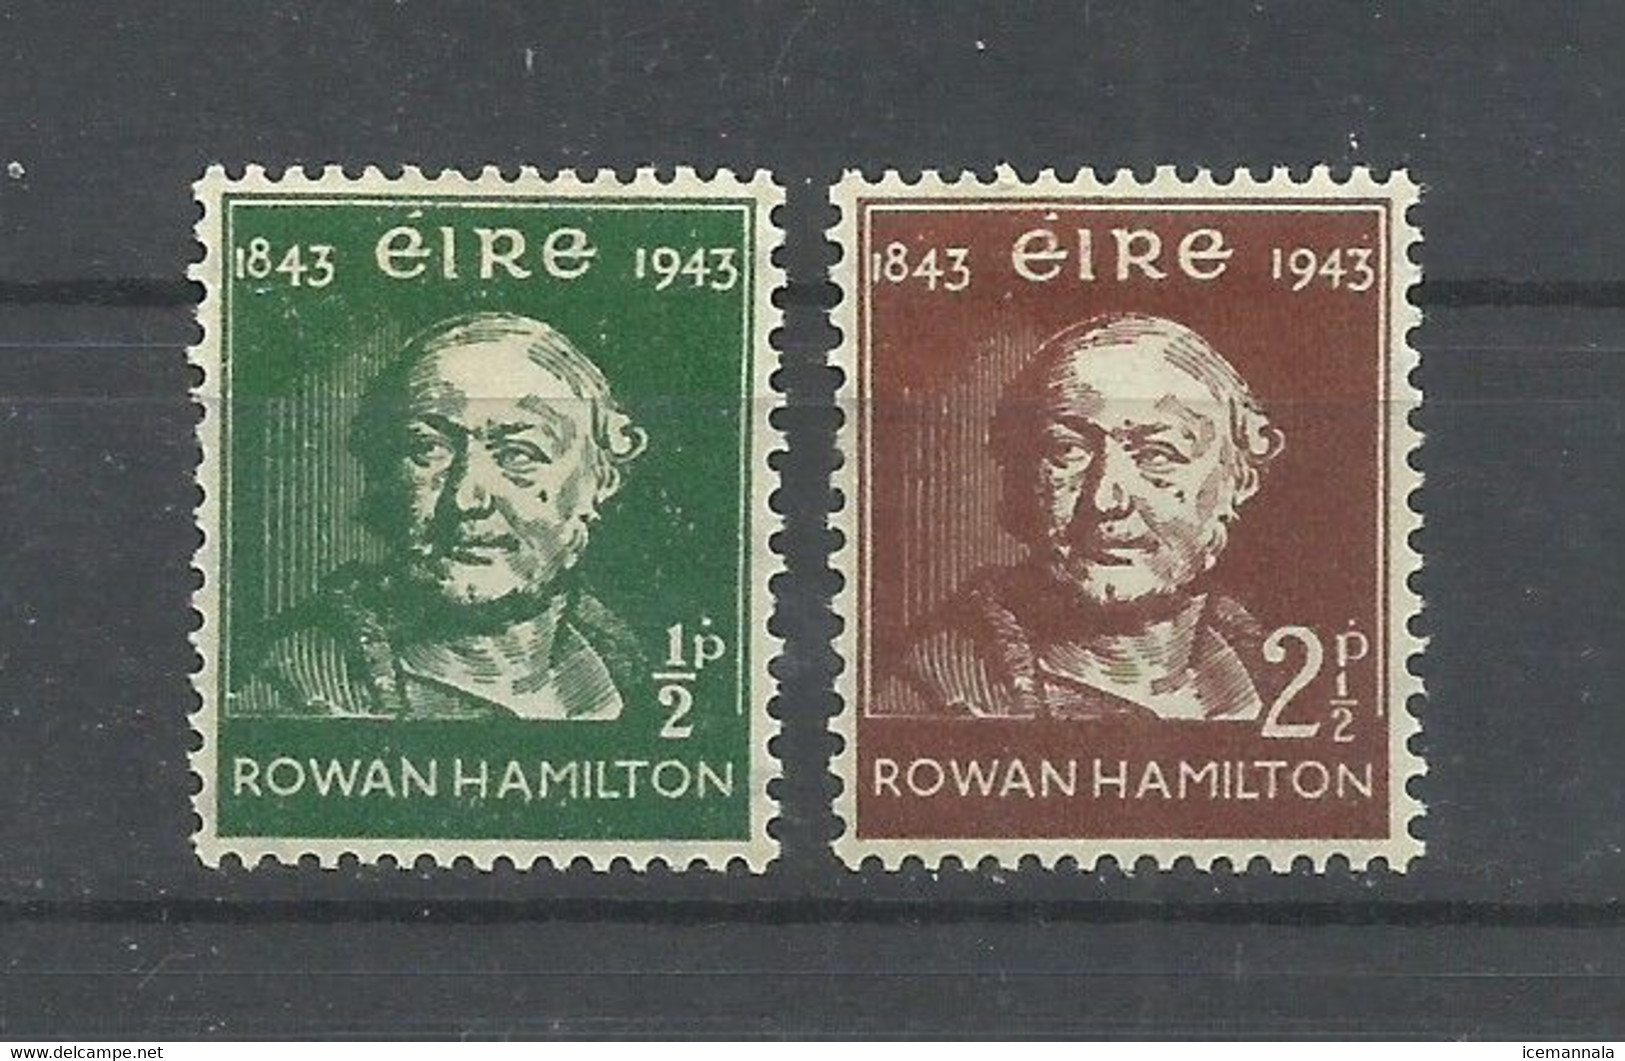 IRLANDA   YVERT  97/98   MH  * - Unused Stamps